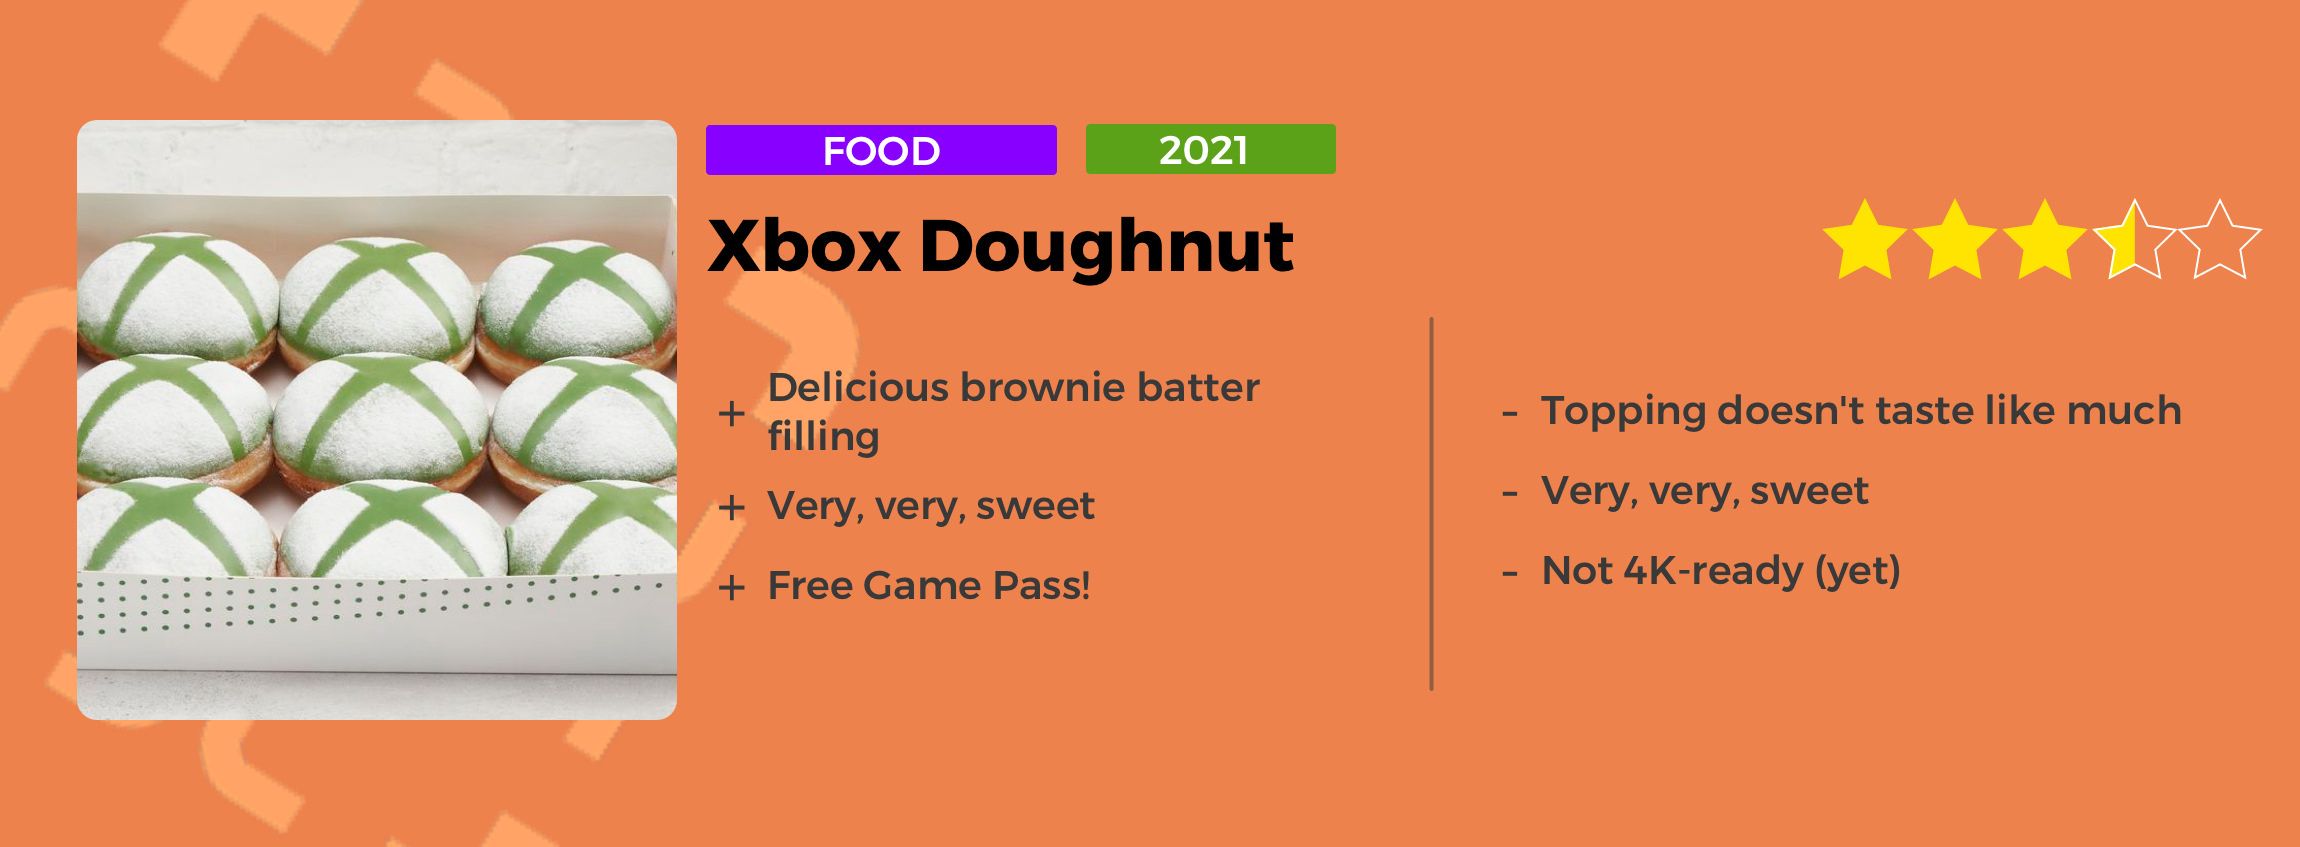 xbox doughnut review scorecard